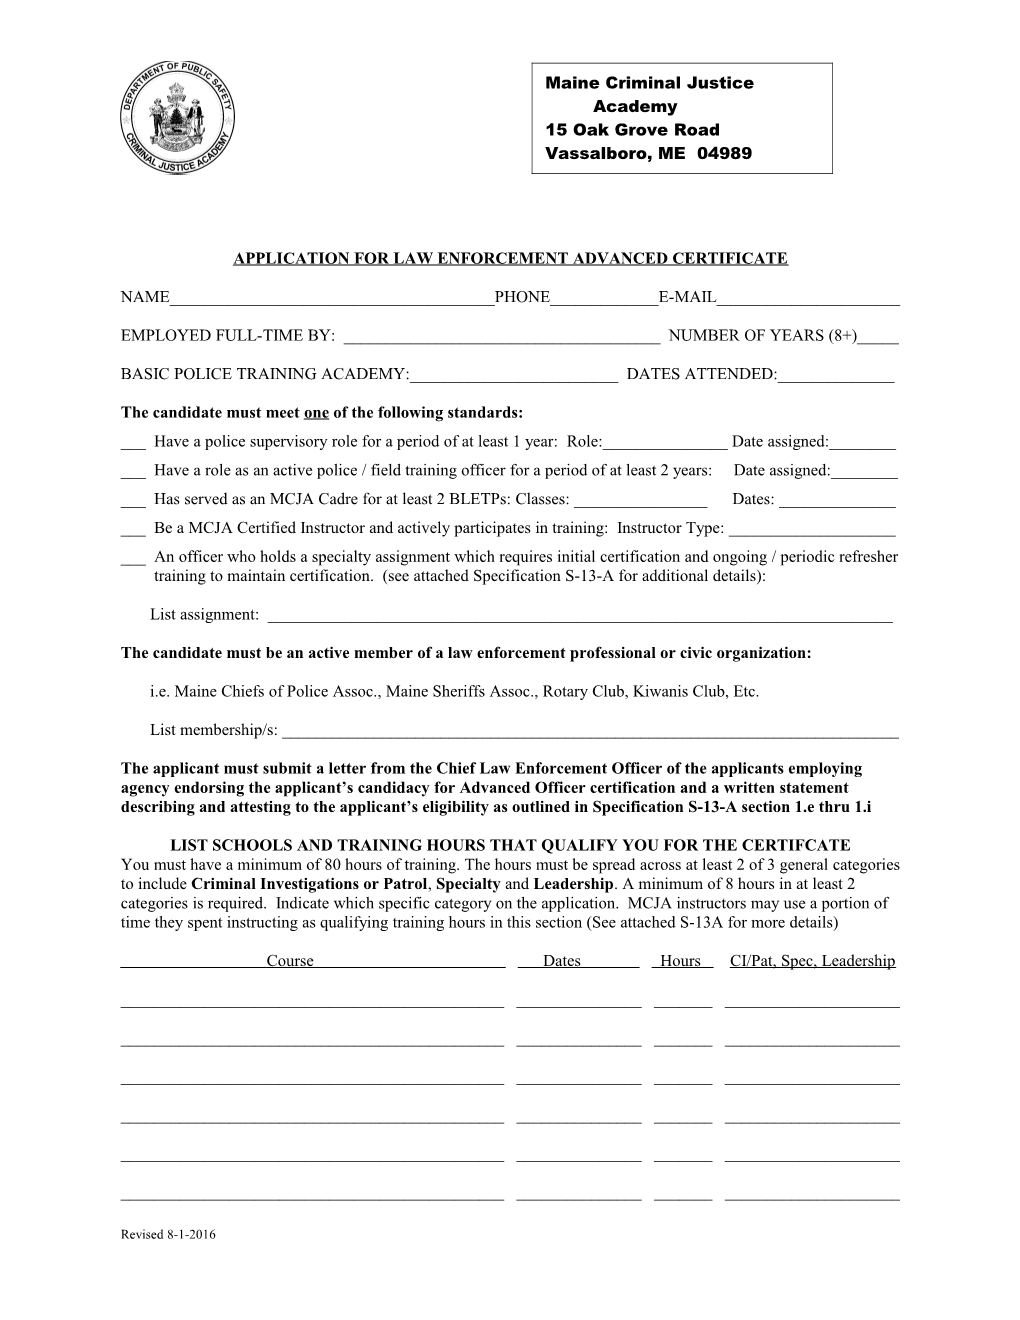 Application for Law Enforcement Advanced Certificate